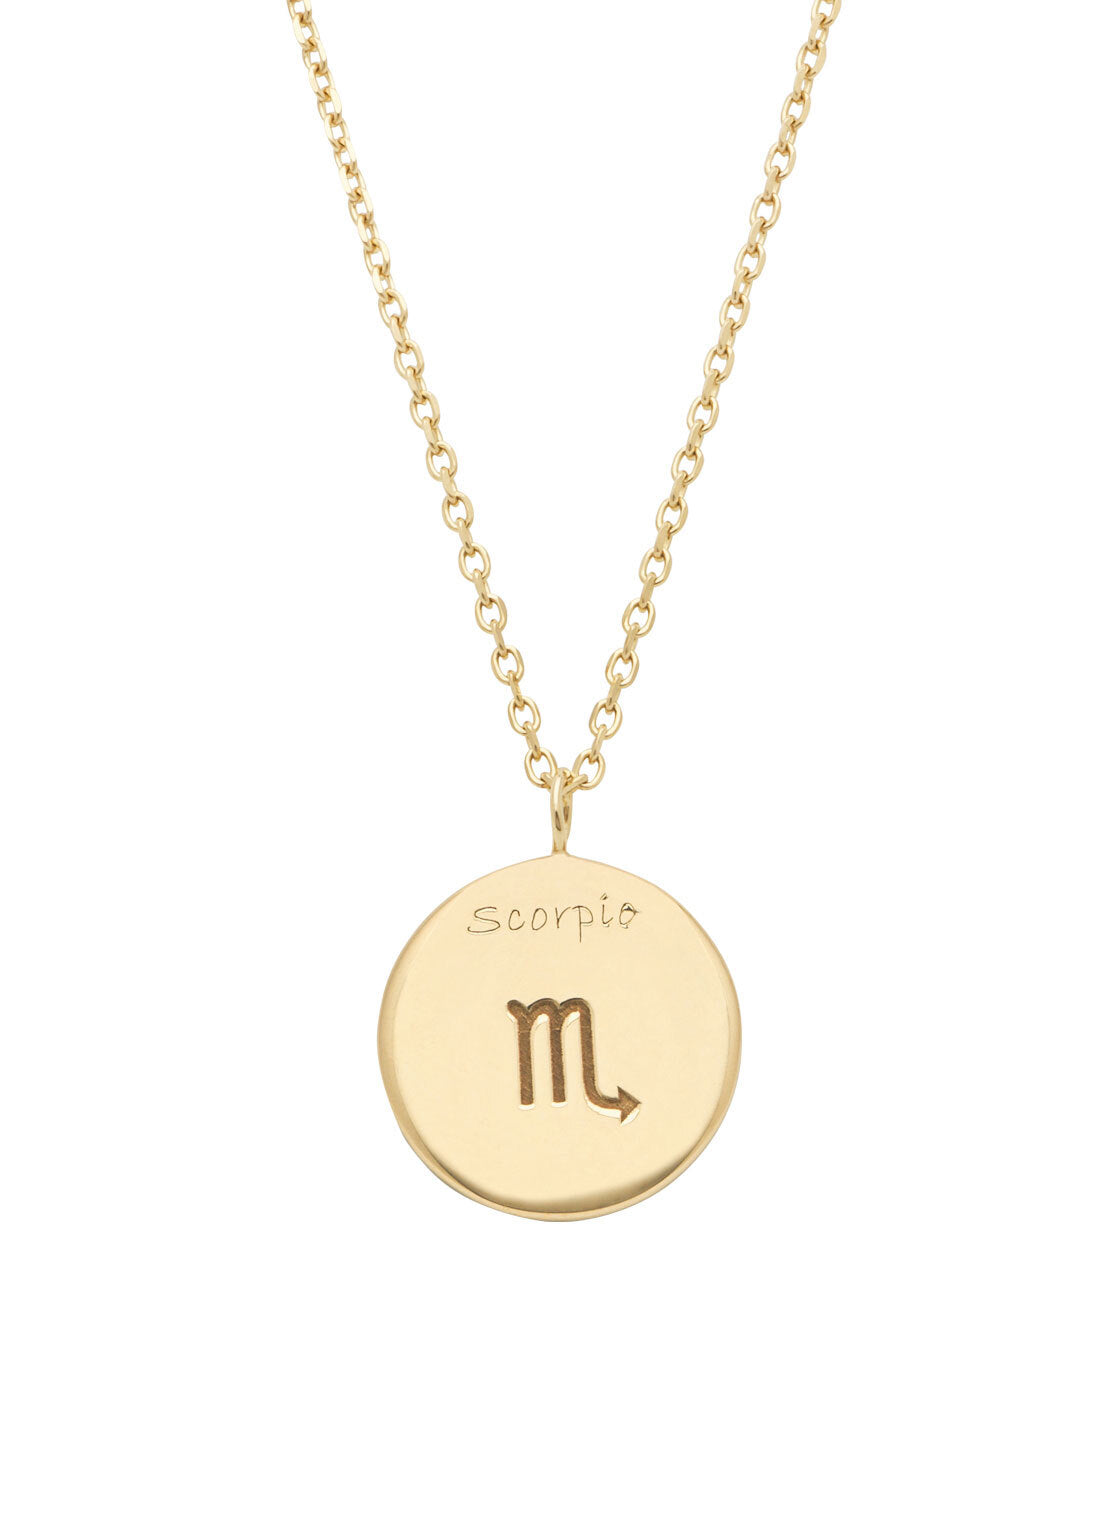 Yellow gold necklace, zodiac scorpio (scorpion)